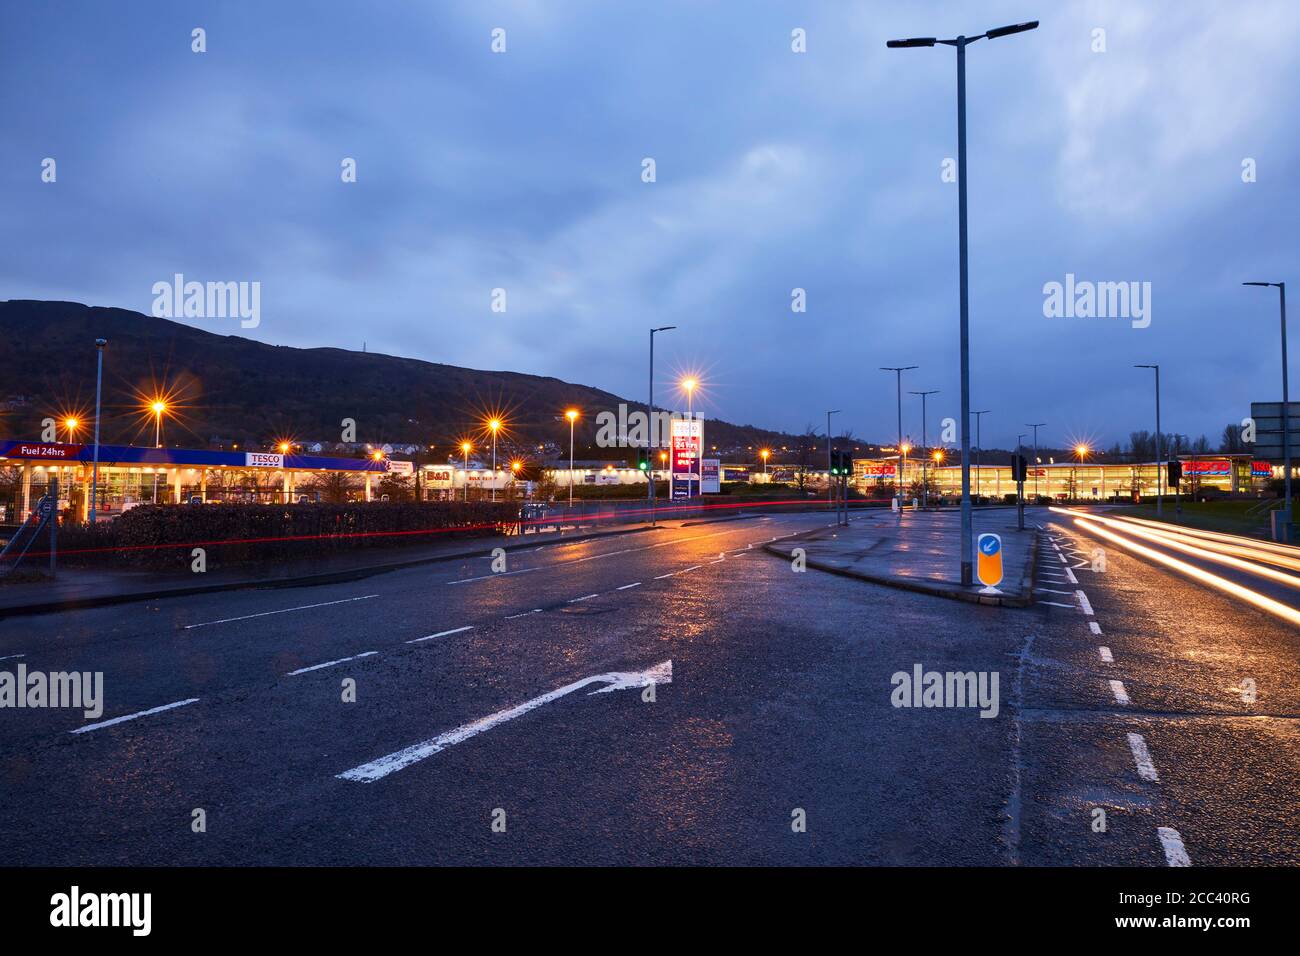 Car park entrance. Abbey Retail Park, Belfast, Belfast, Ireland. Architect: N/A, 2019. Stock Photo